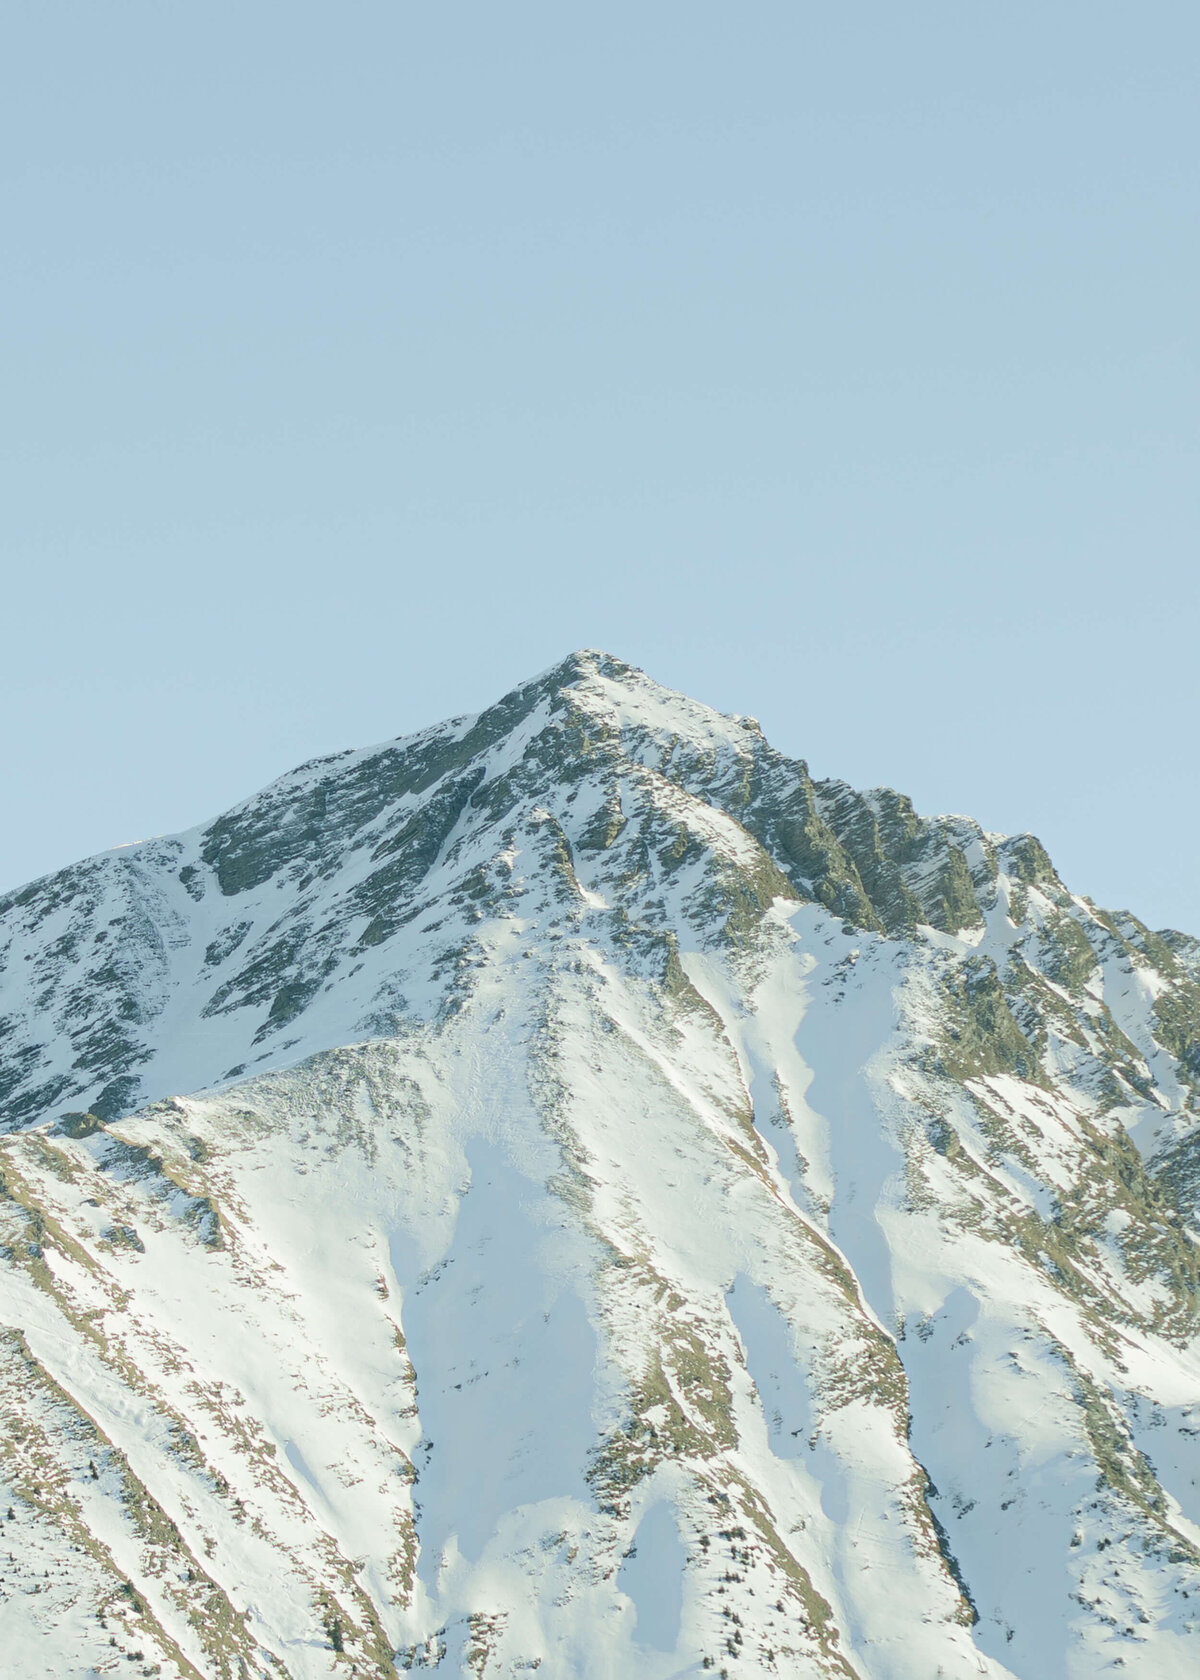 chloe-winstanley-events-gstaad-snow-mountain